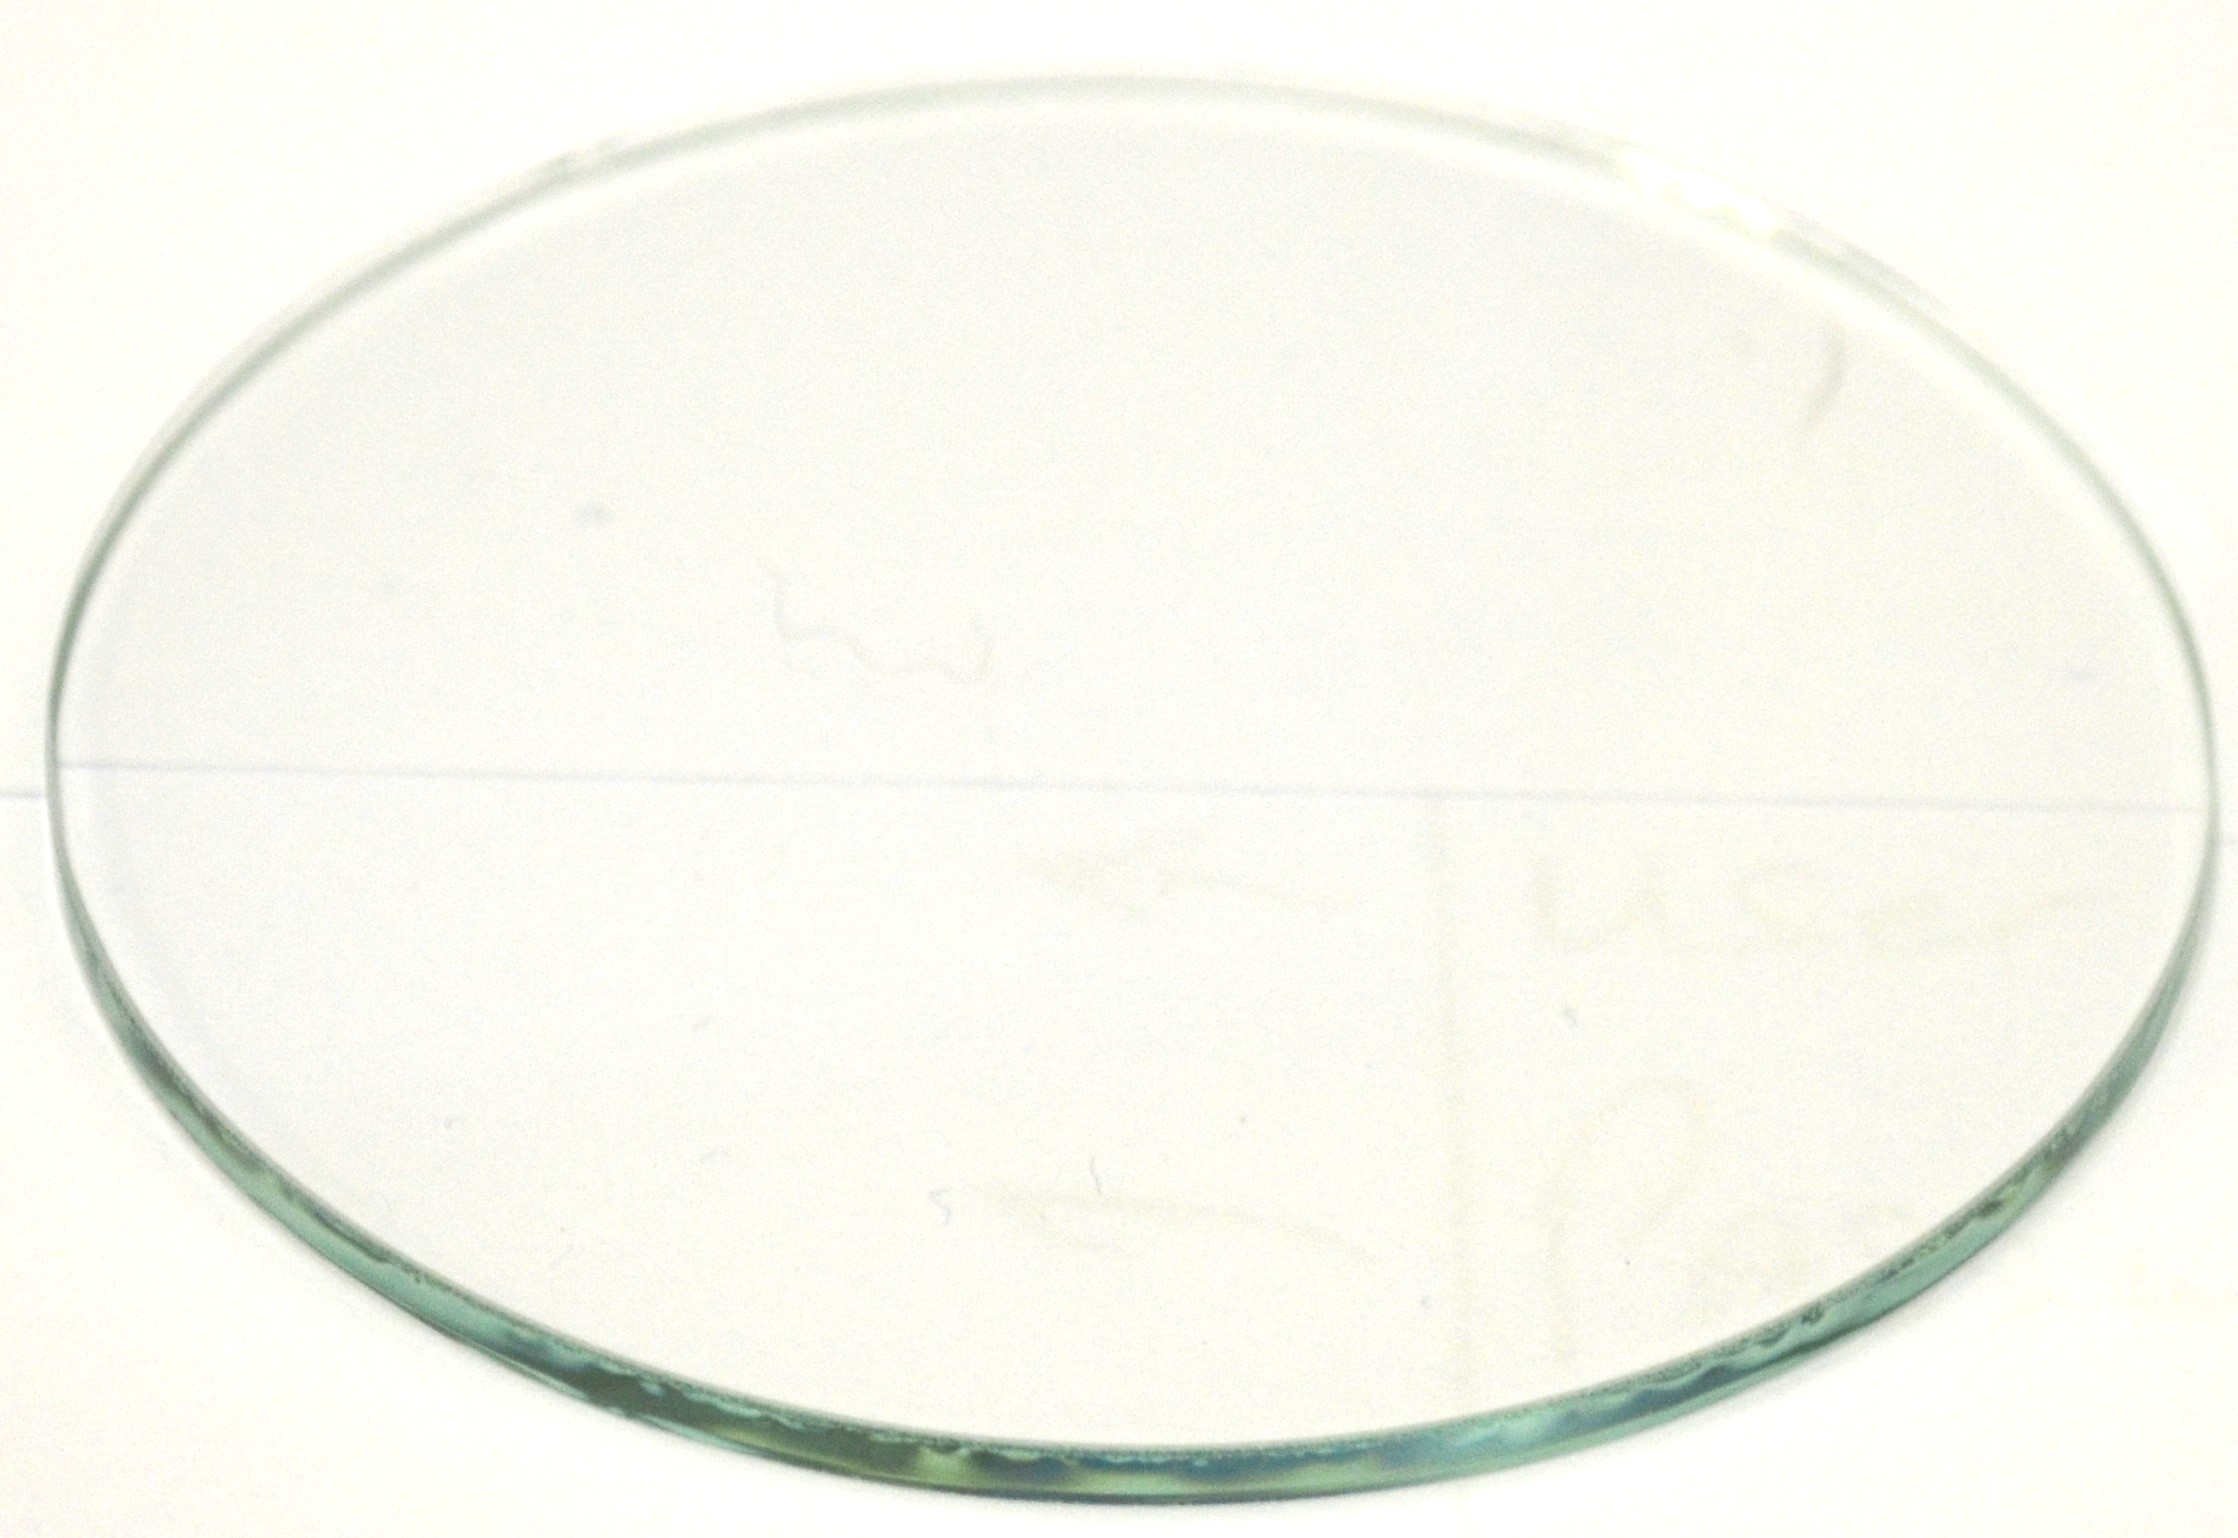 3mm x 75mm Chronometric Instrument Glass